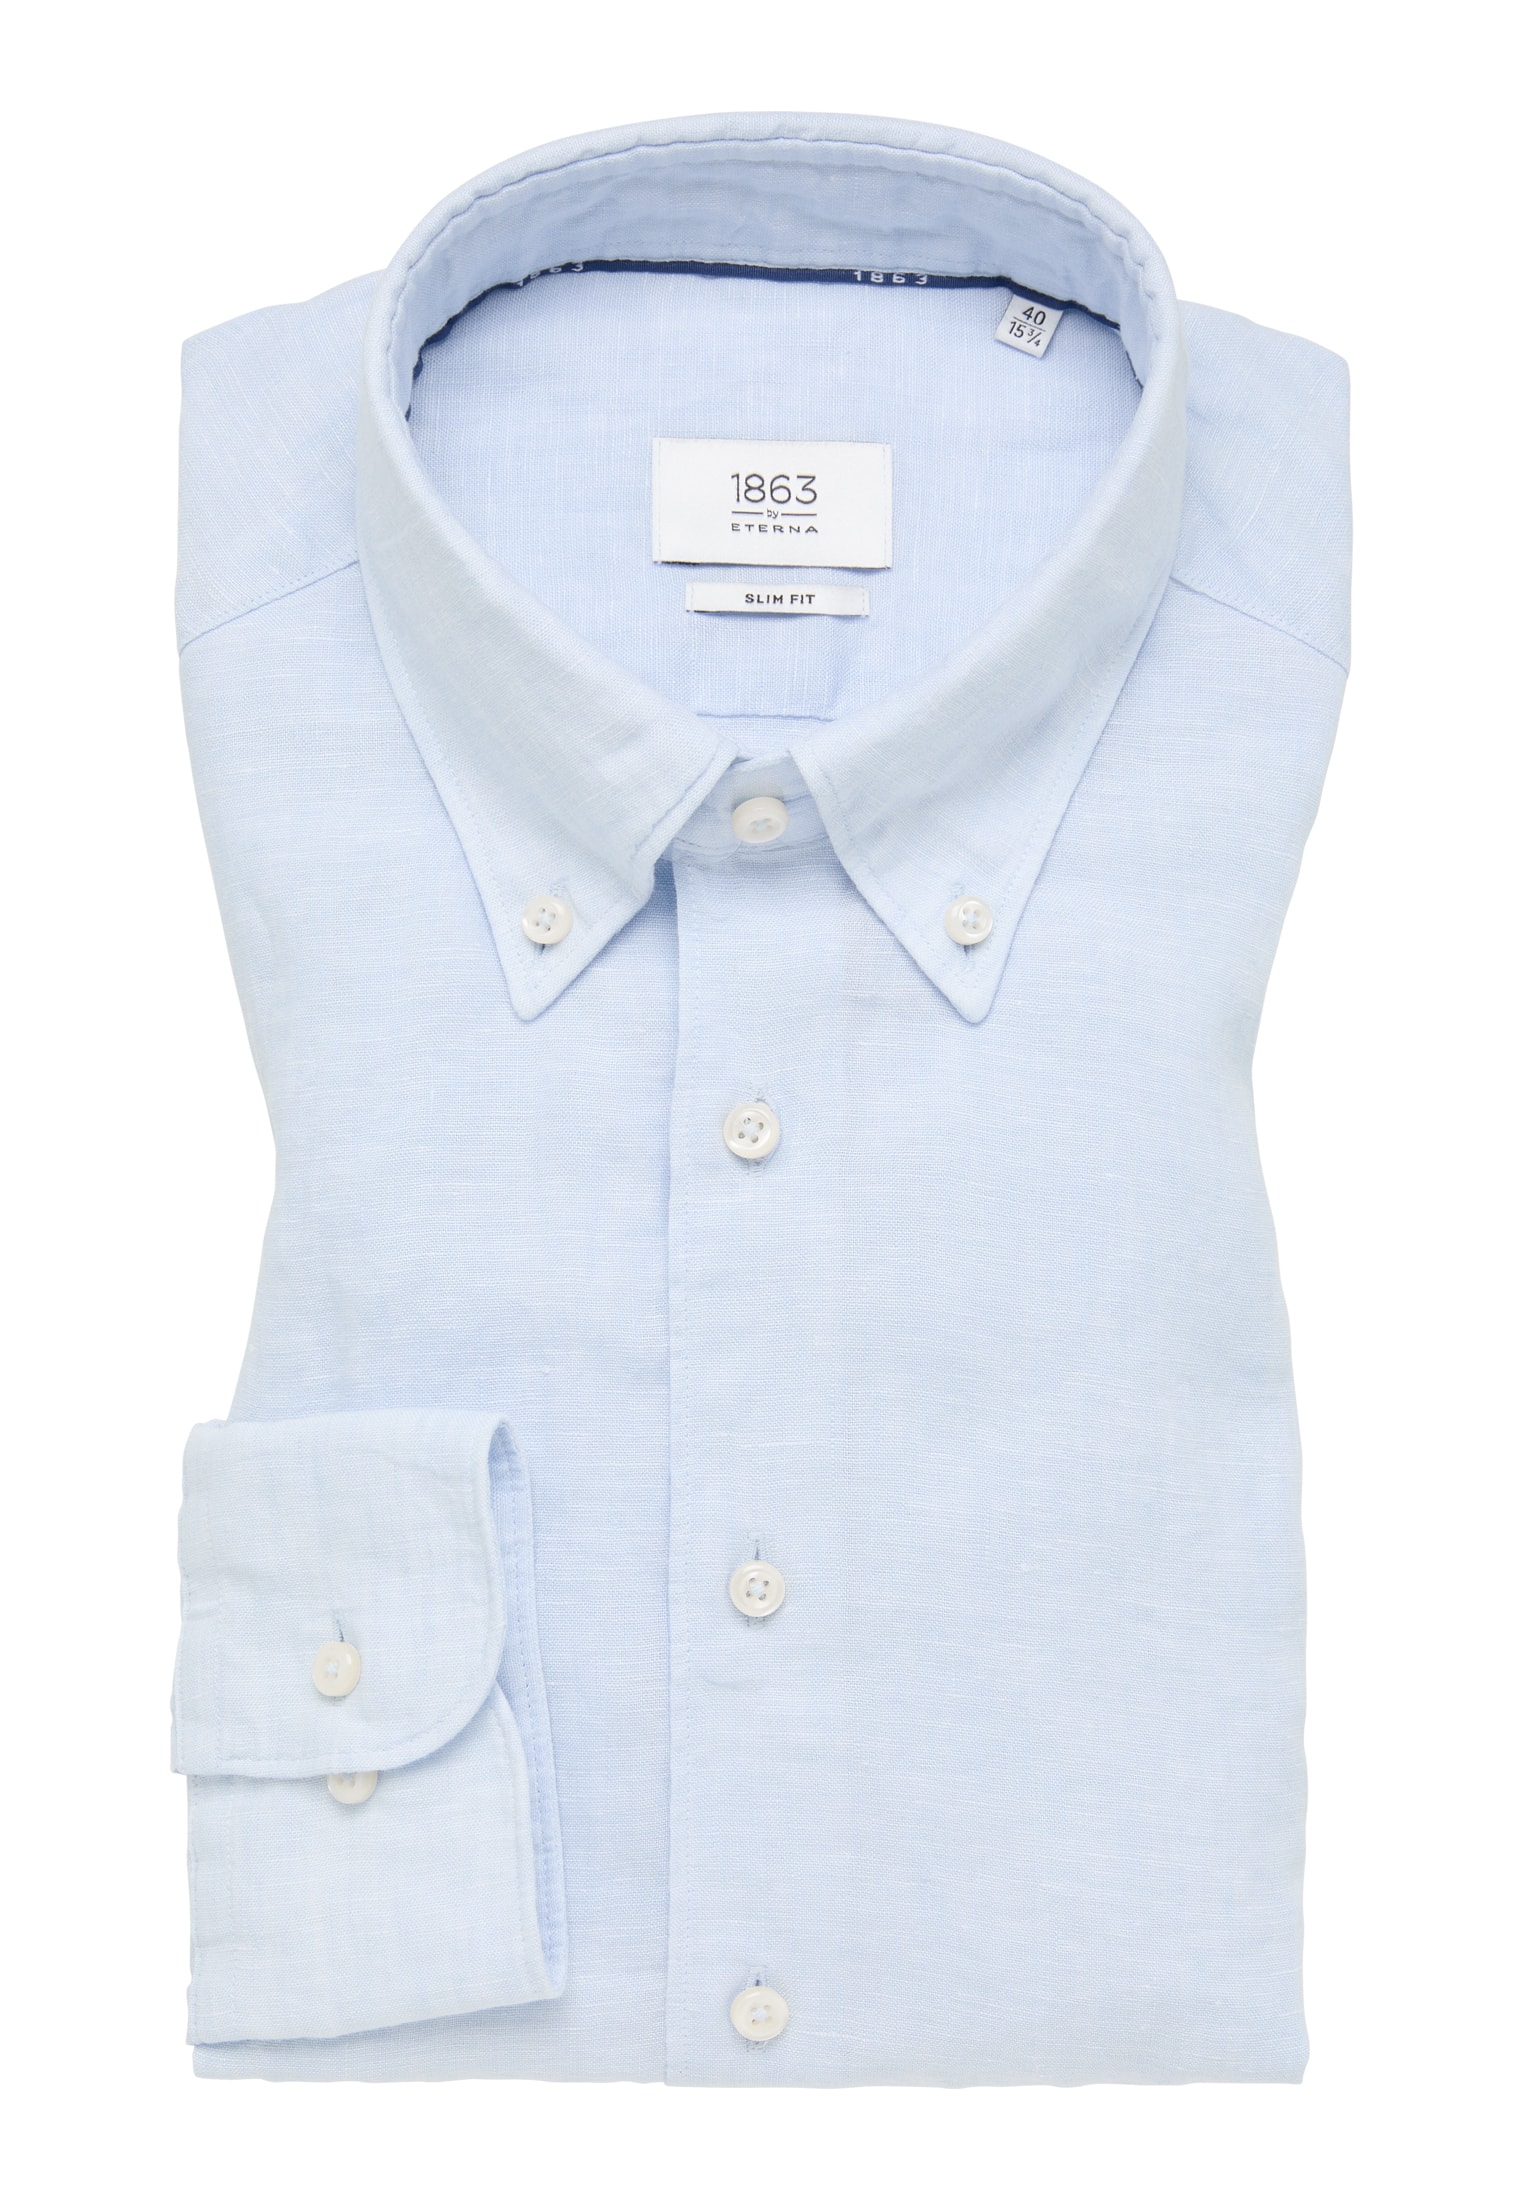 SLIM FIT Shirt in light 1SH11907-01-11-40-1/1 long | | blue light plain 40 | blue sleeve 